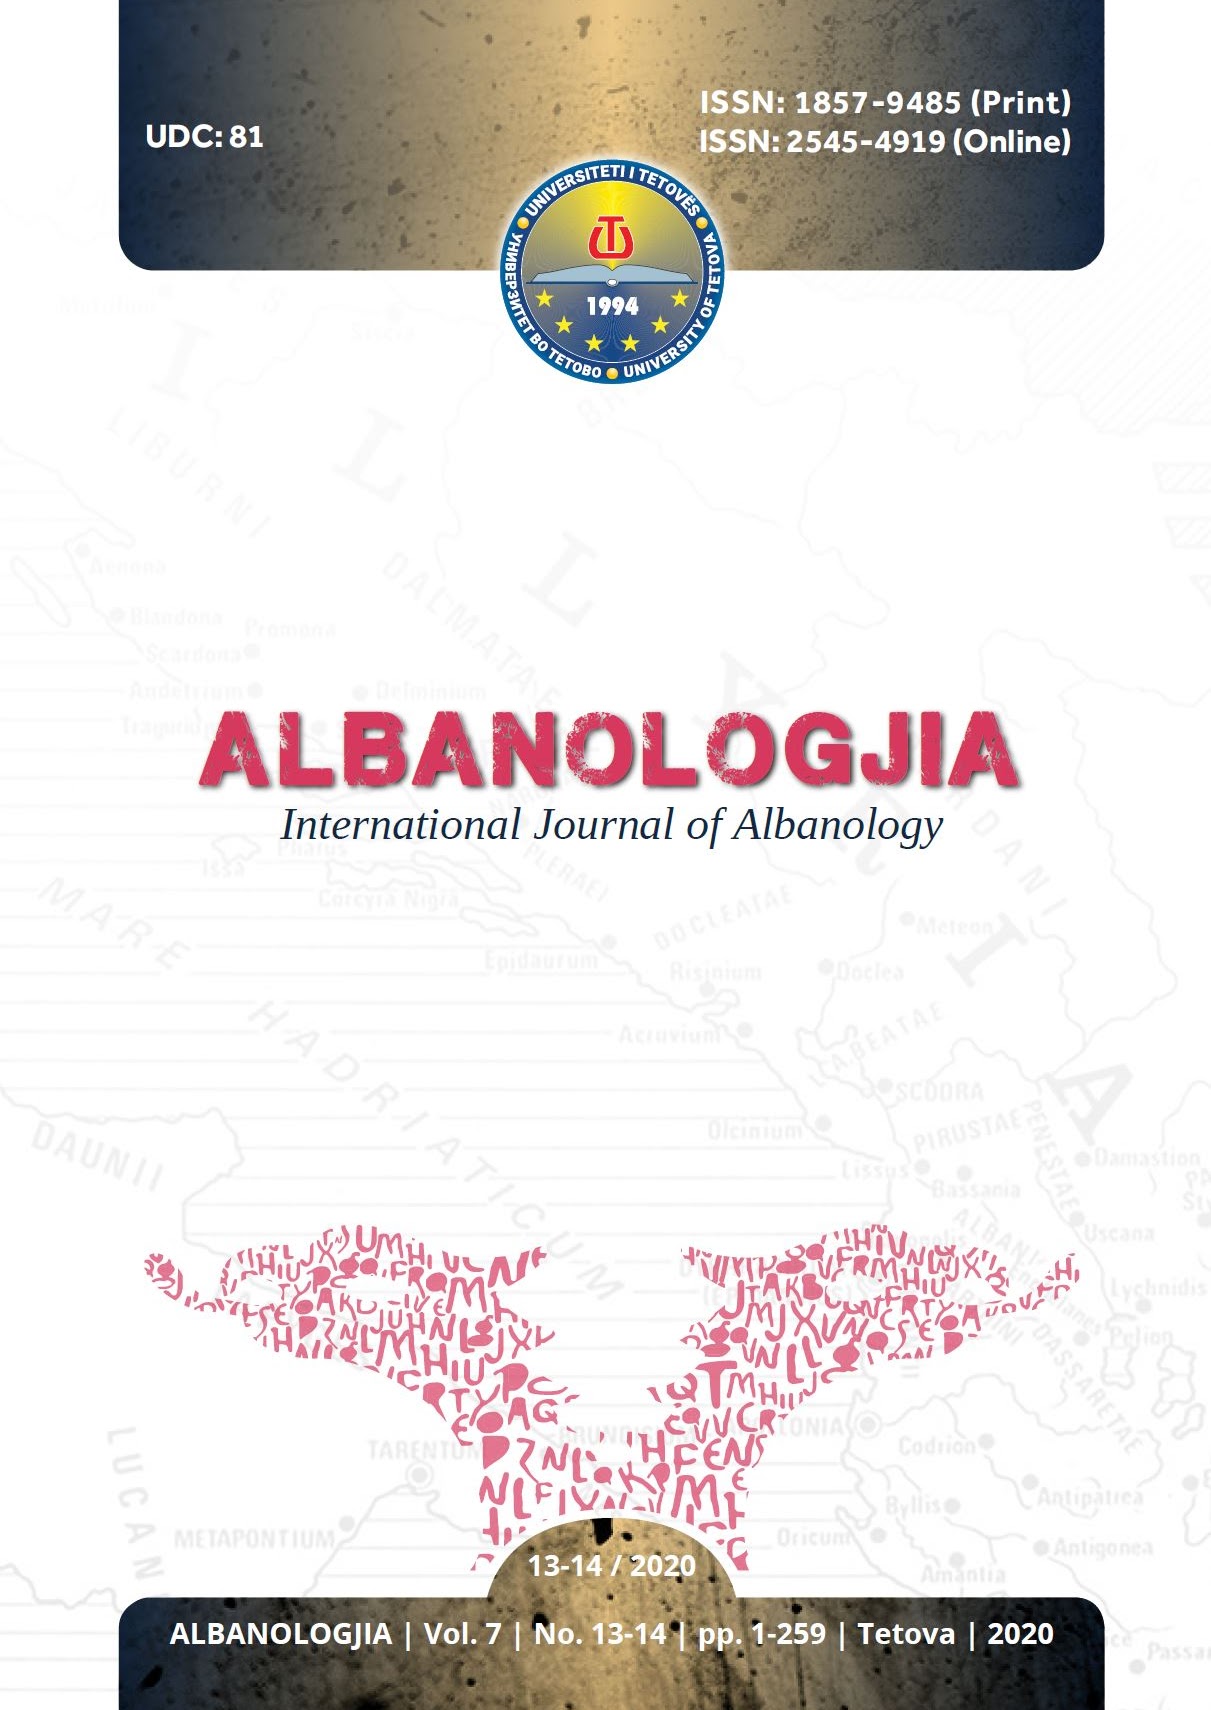 PROF. ANDULLAH ZIMERI DISTINCLY REVIEWS THE ALBANIAN DICTIONARY Cover Image